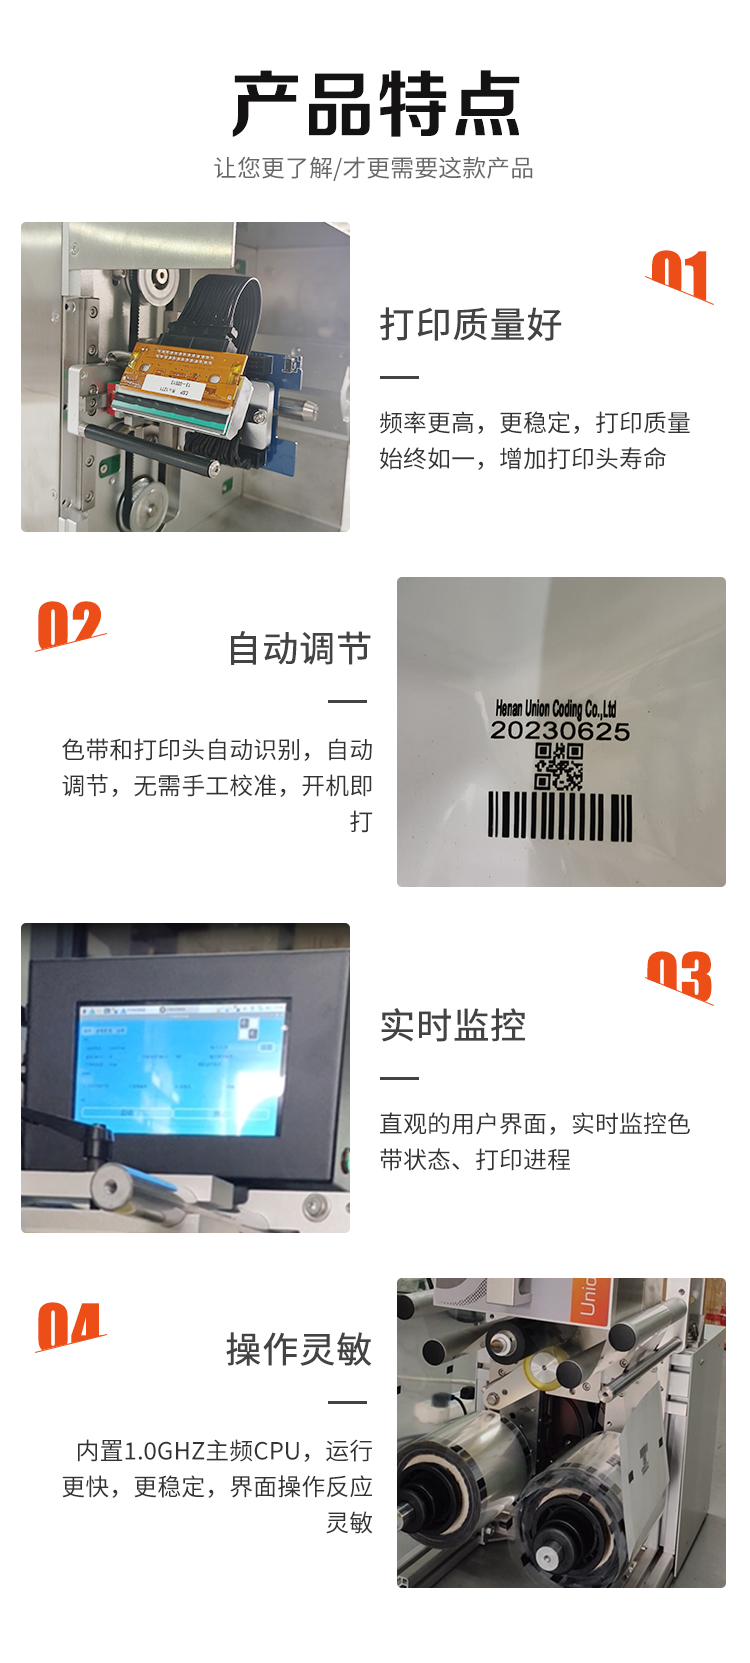 Hezhong Food Baking Date Coding Machine 32mm 53mm Printing Head TTOX3 Heat Transfer Printing Machine